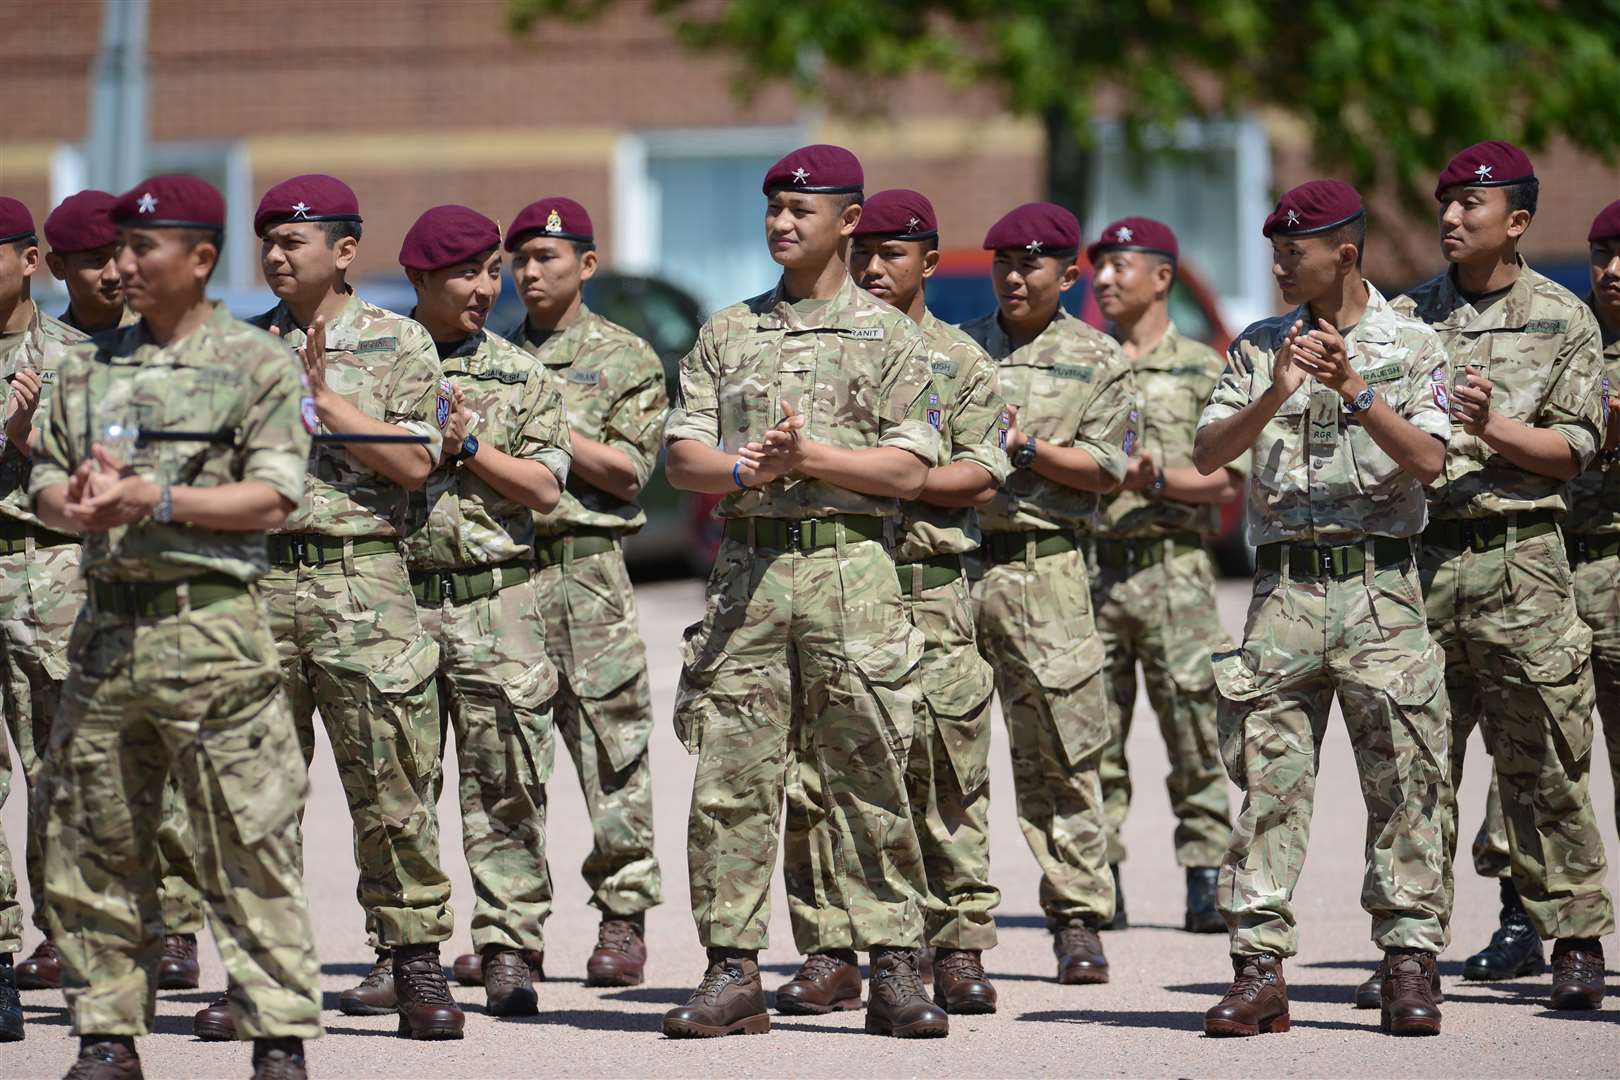 2nd Battalion Royal Gurkha Rifles parade as part of becoming part of 16 Air Assault Brigade